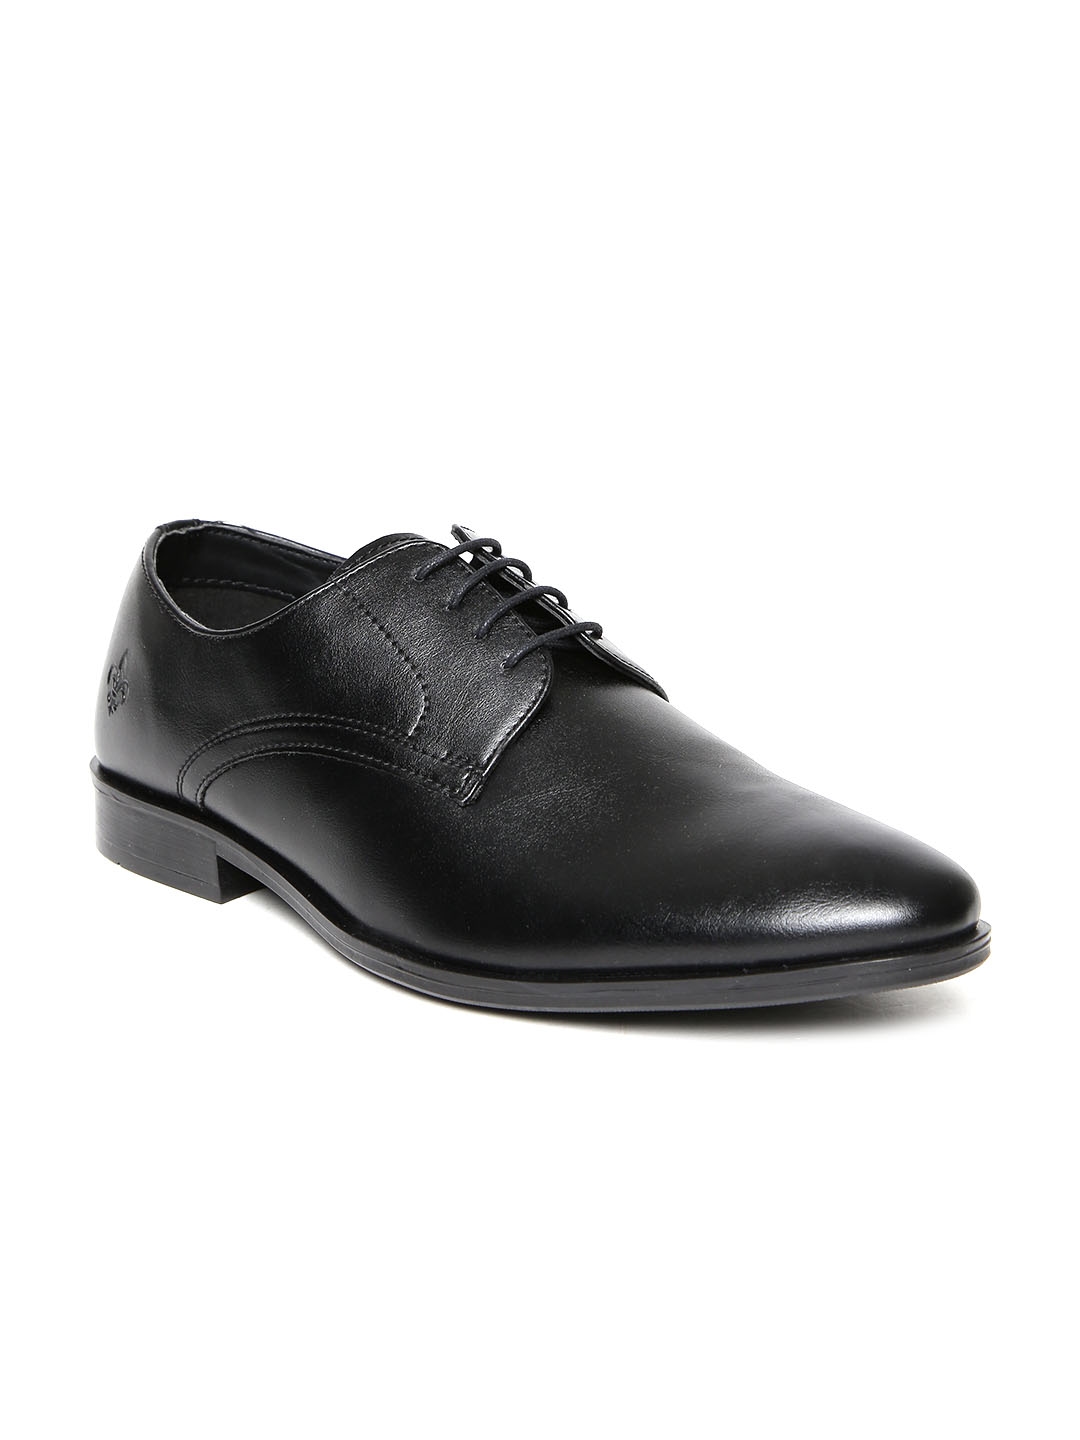 black leather formal shoes mens